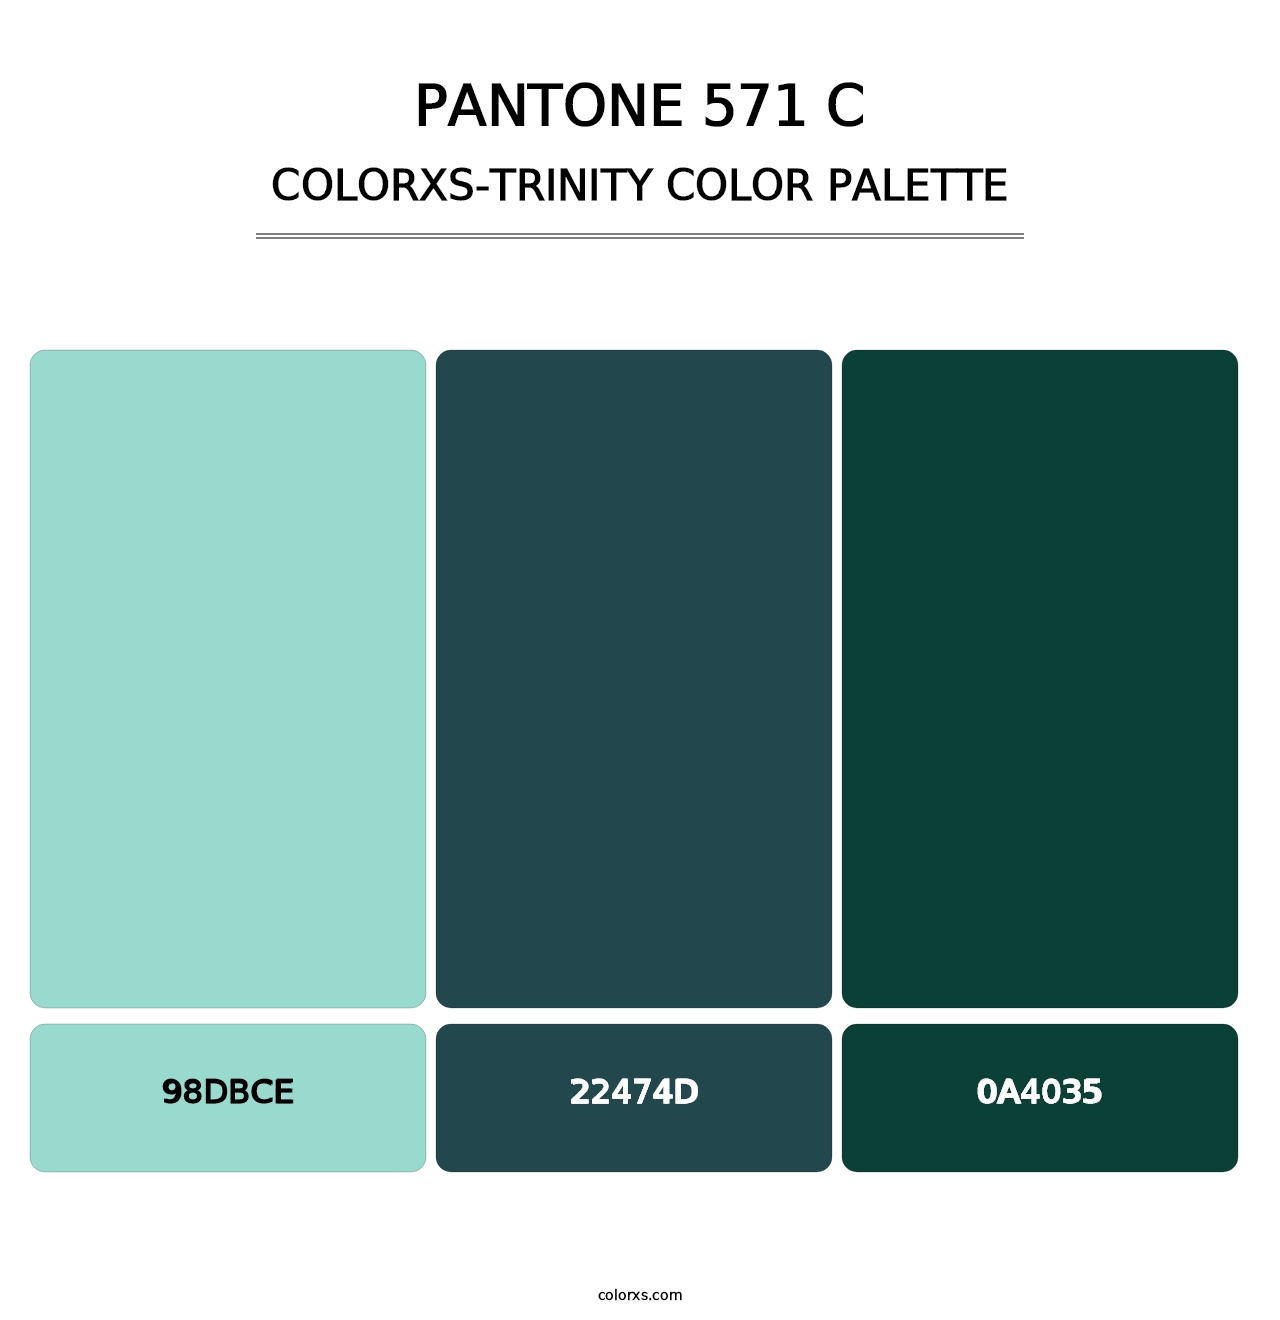 PANTONE 571 C - Colorxs Trinity Palette